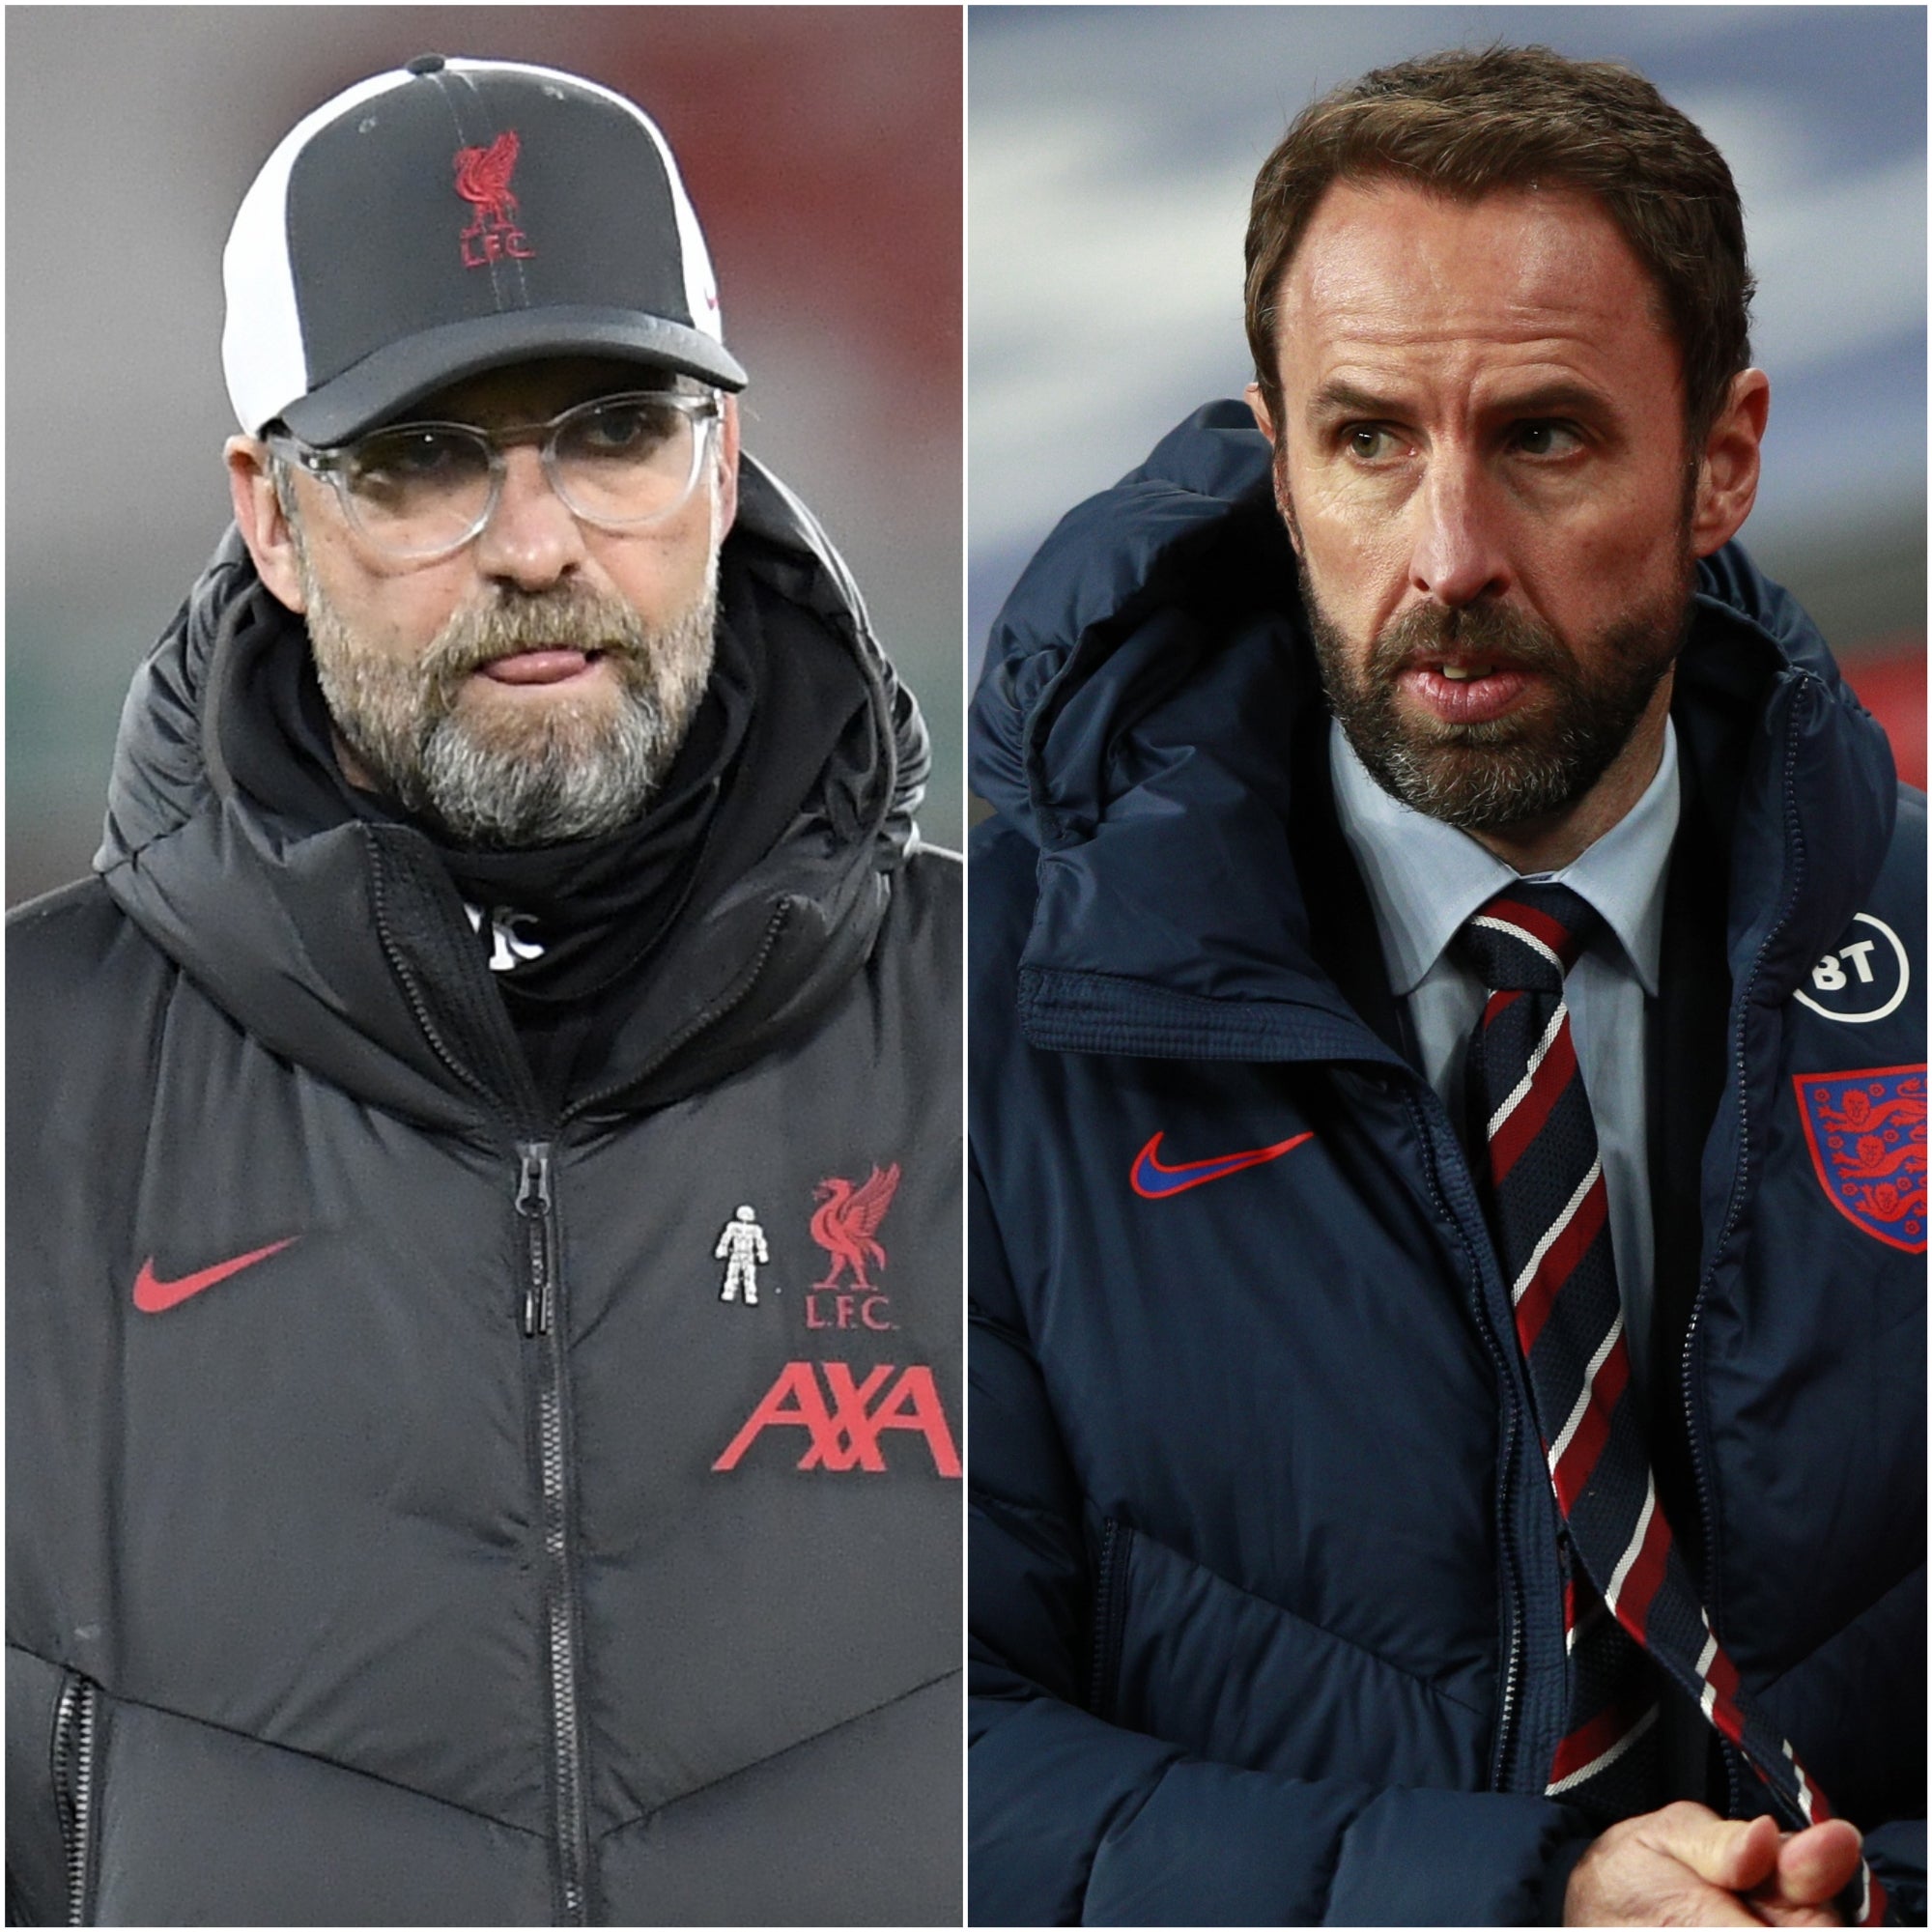 Liverpool manager Jurgen Klopp and England boss Gareth Southgate, right (PA)